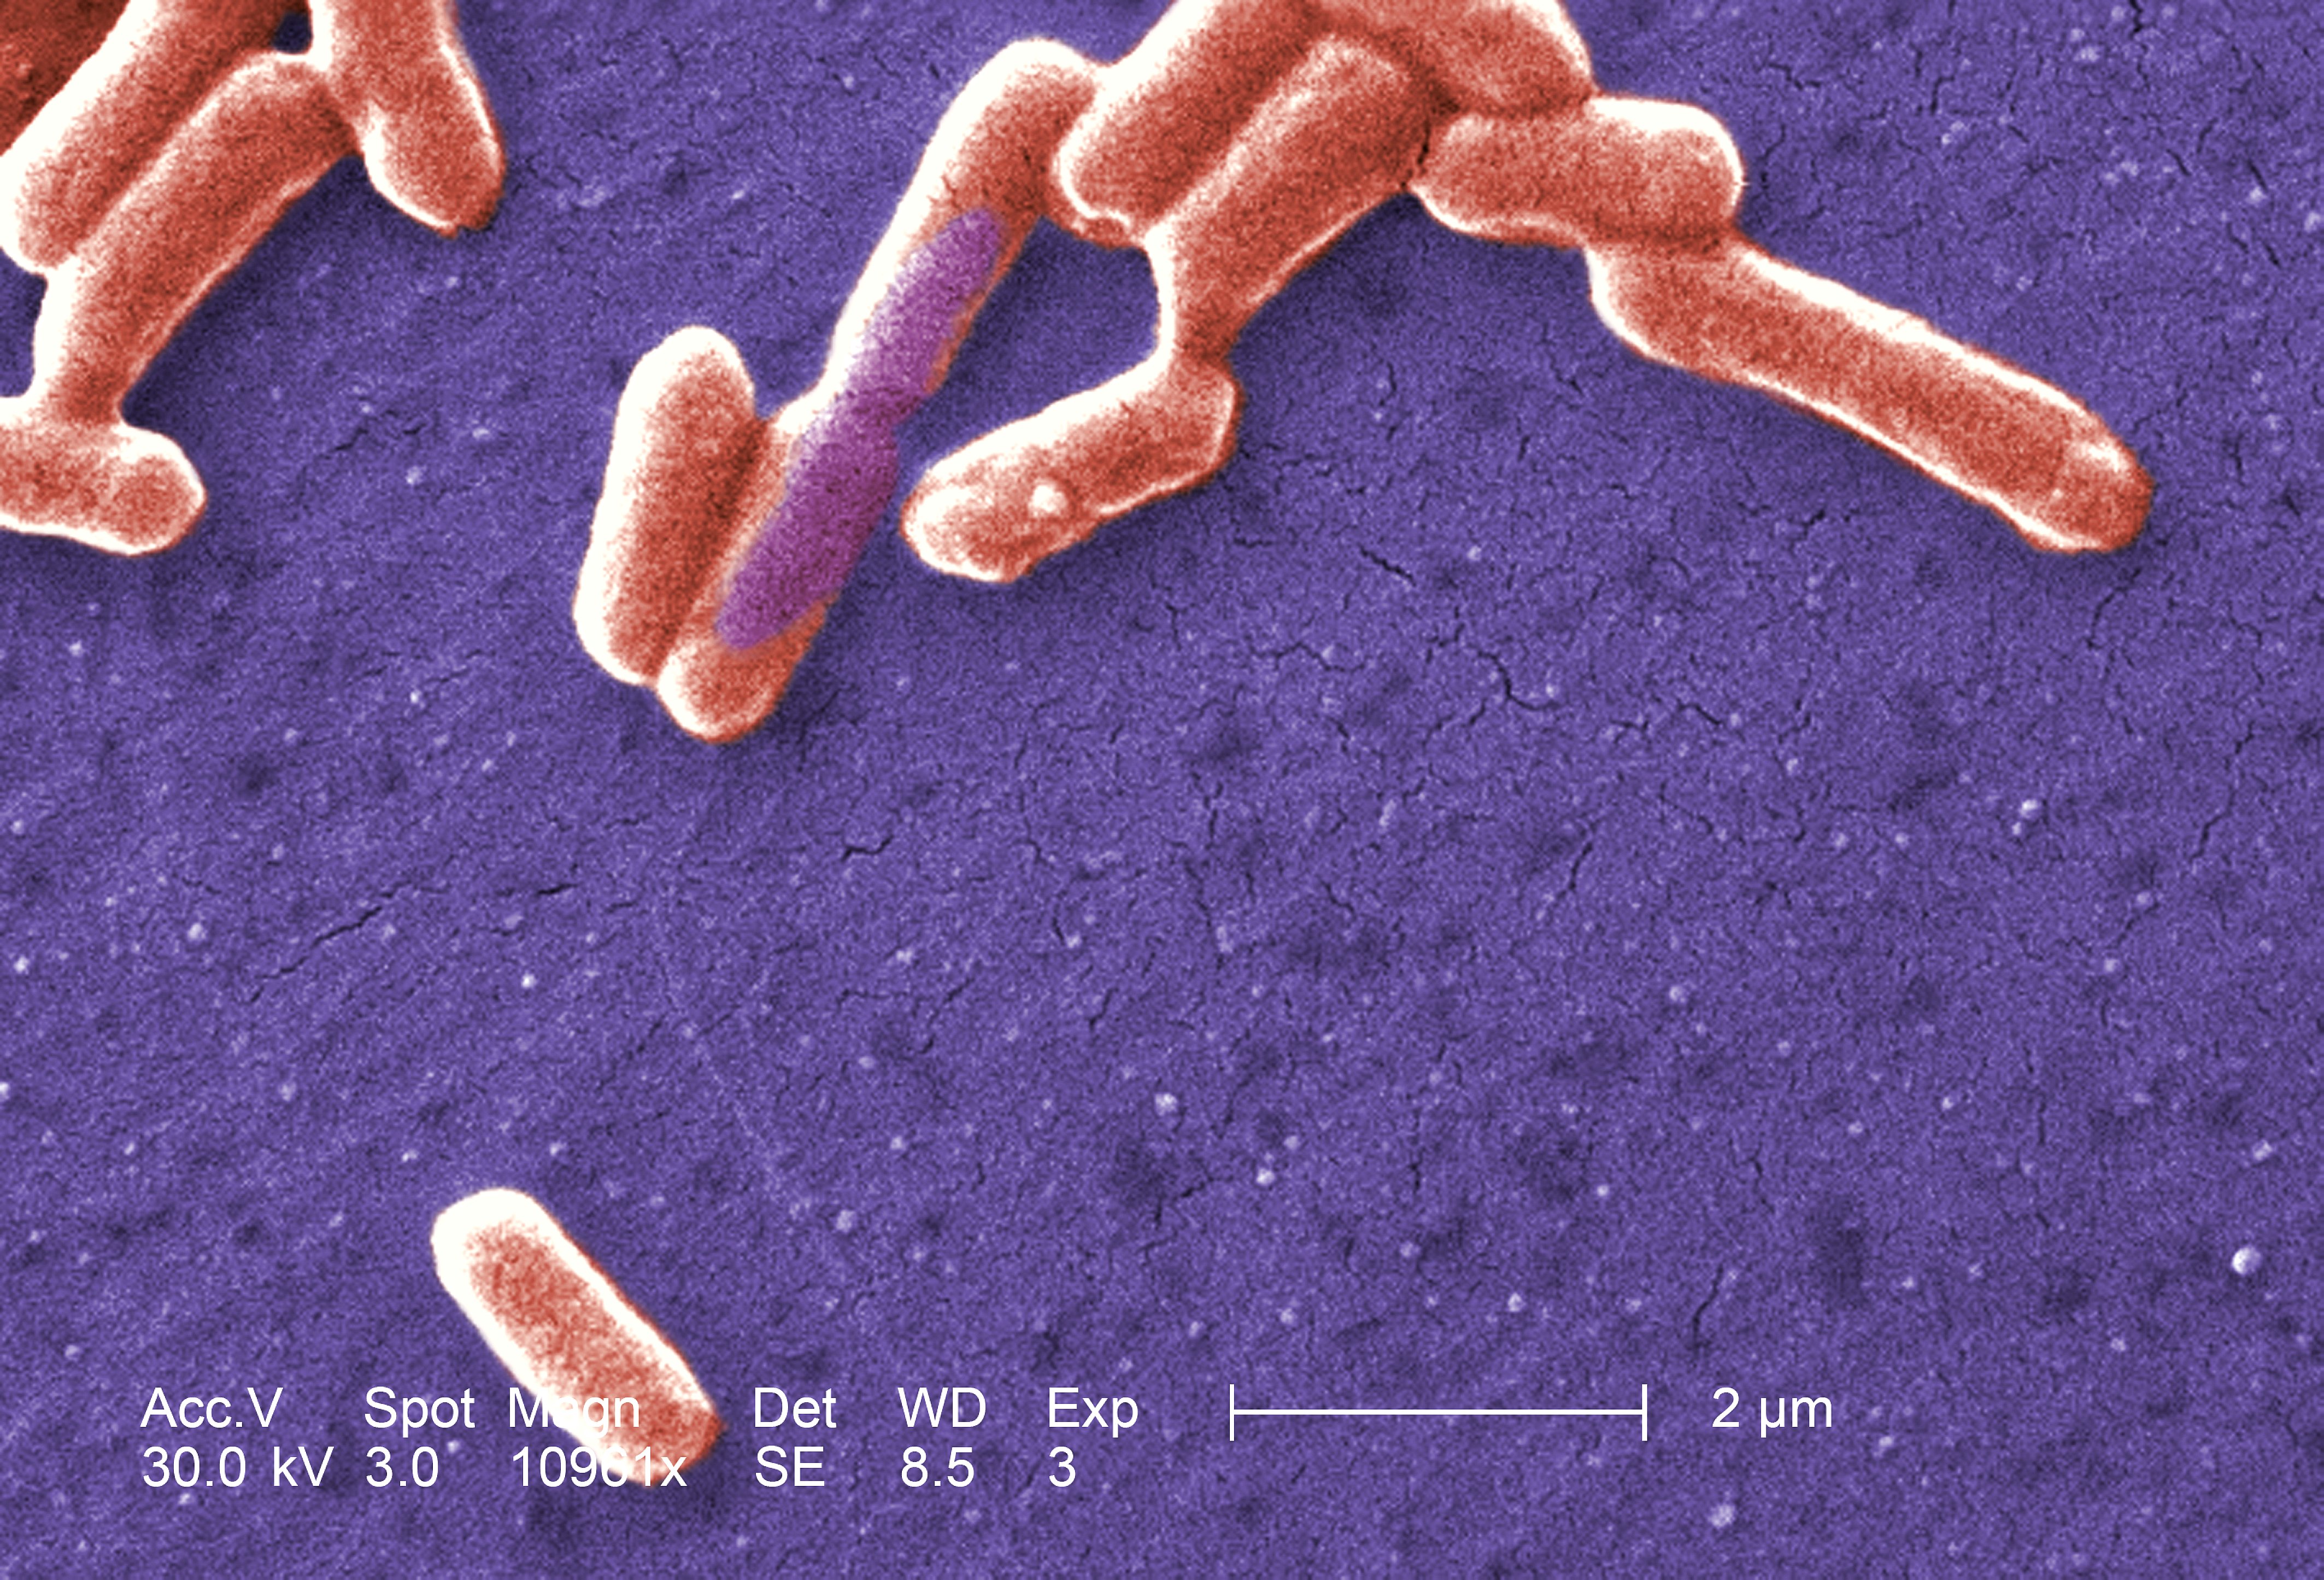 Coli sotwe. Кишечная палочка Escherichia coli. Escherichia coli под микроскопом. Escherichia coli микрофотография. E coli под микроскопом.